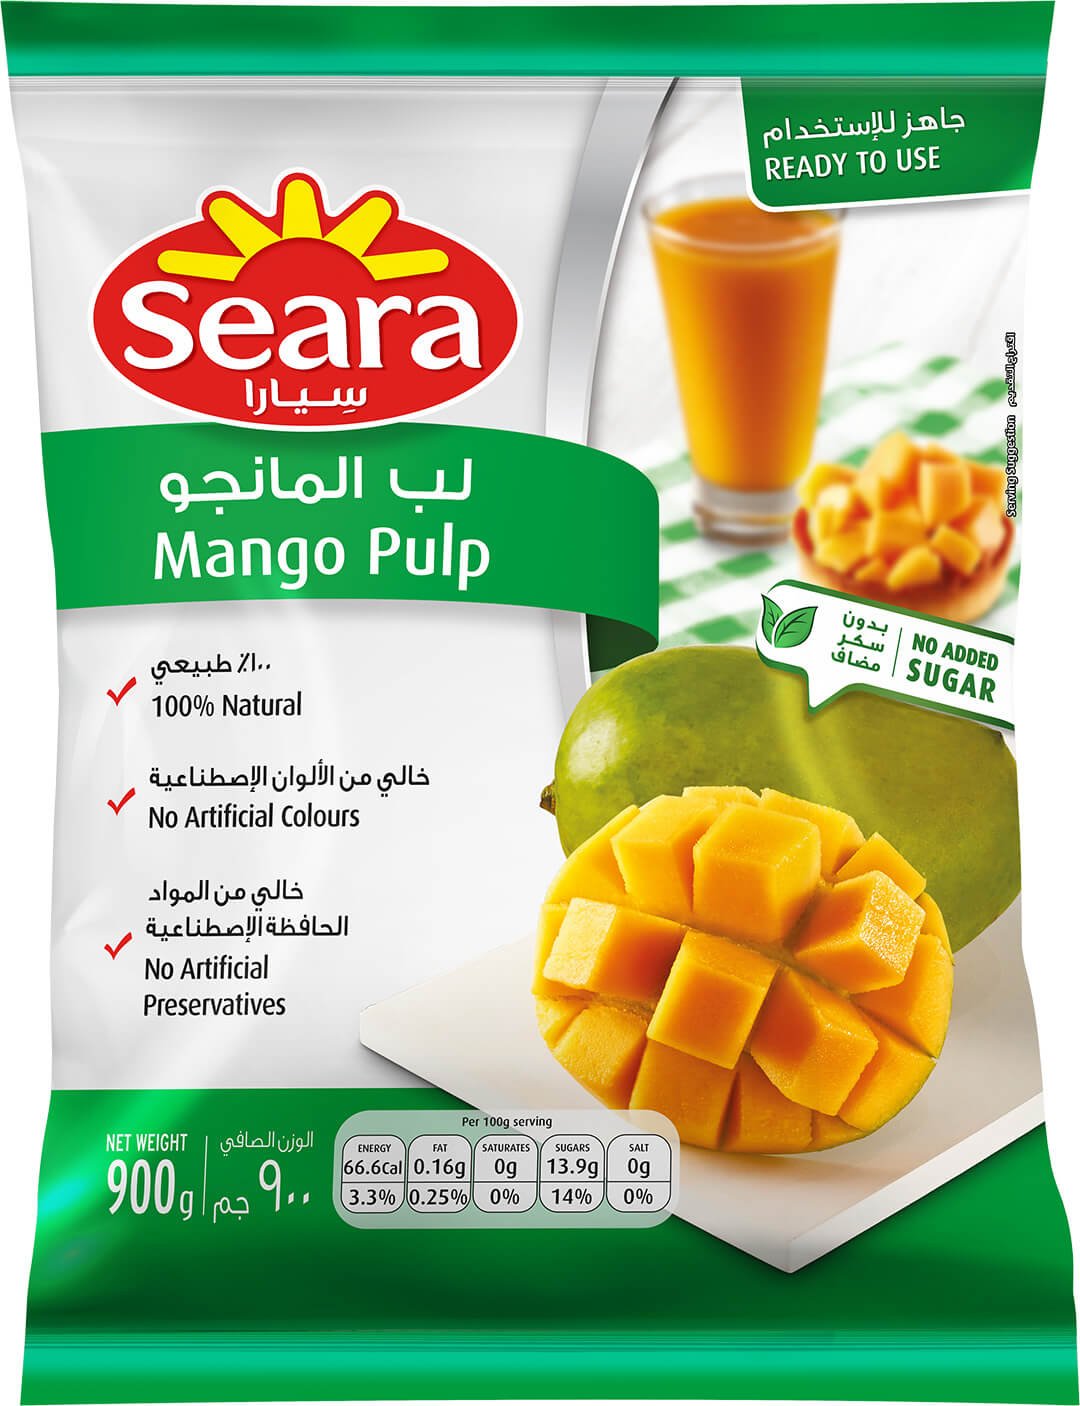 8.1.1.1-Seara-Mango-Pulp-900g-Front.jpg